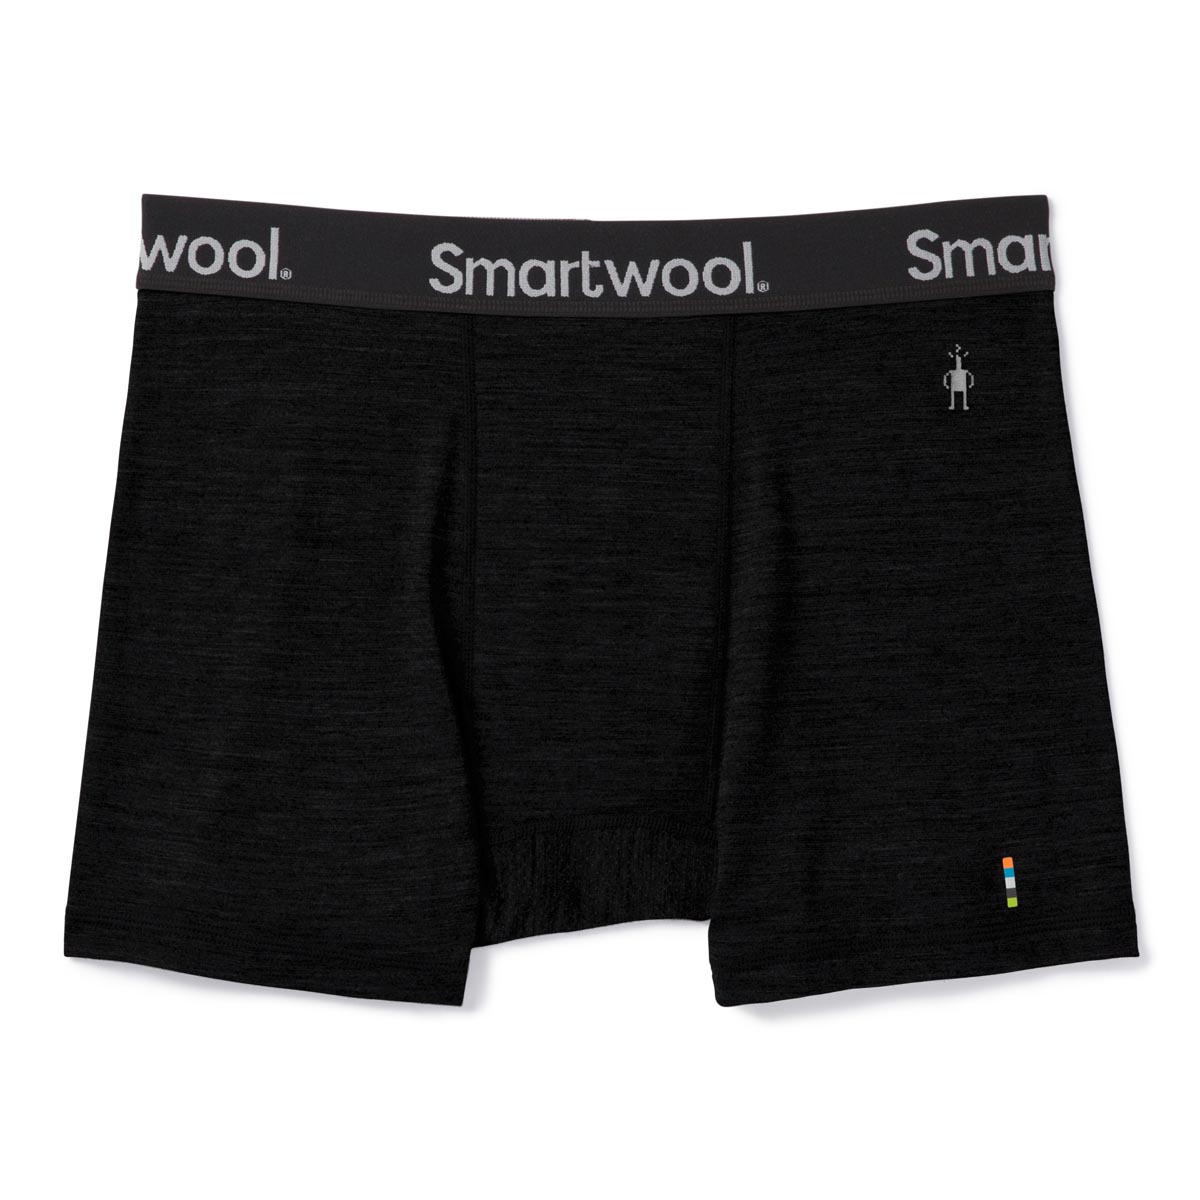 Smartwool Men's Merino Sport Boxer Brief Boxed